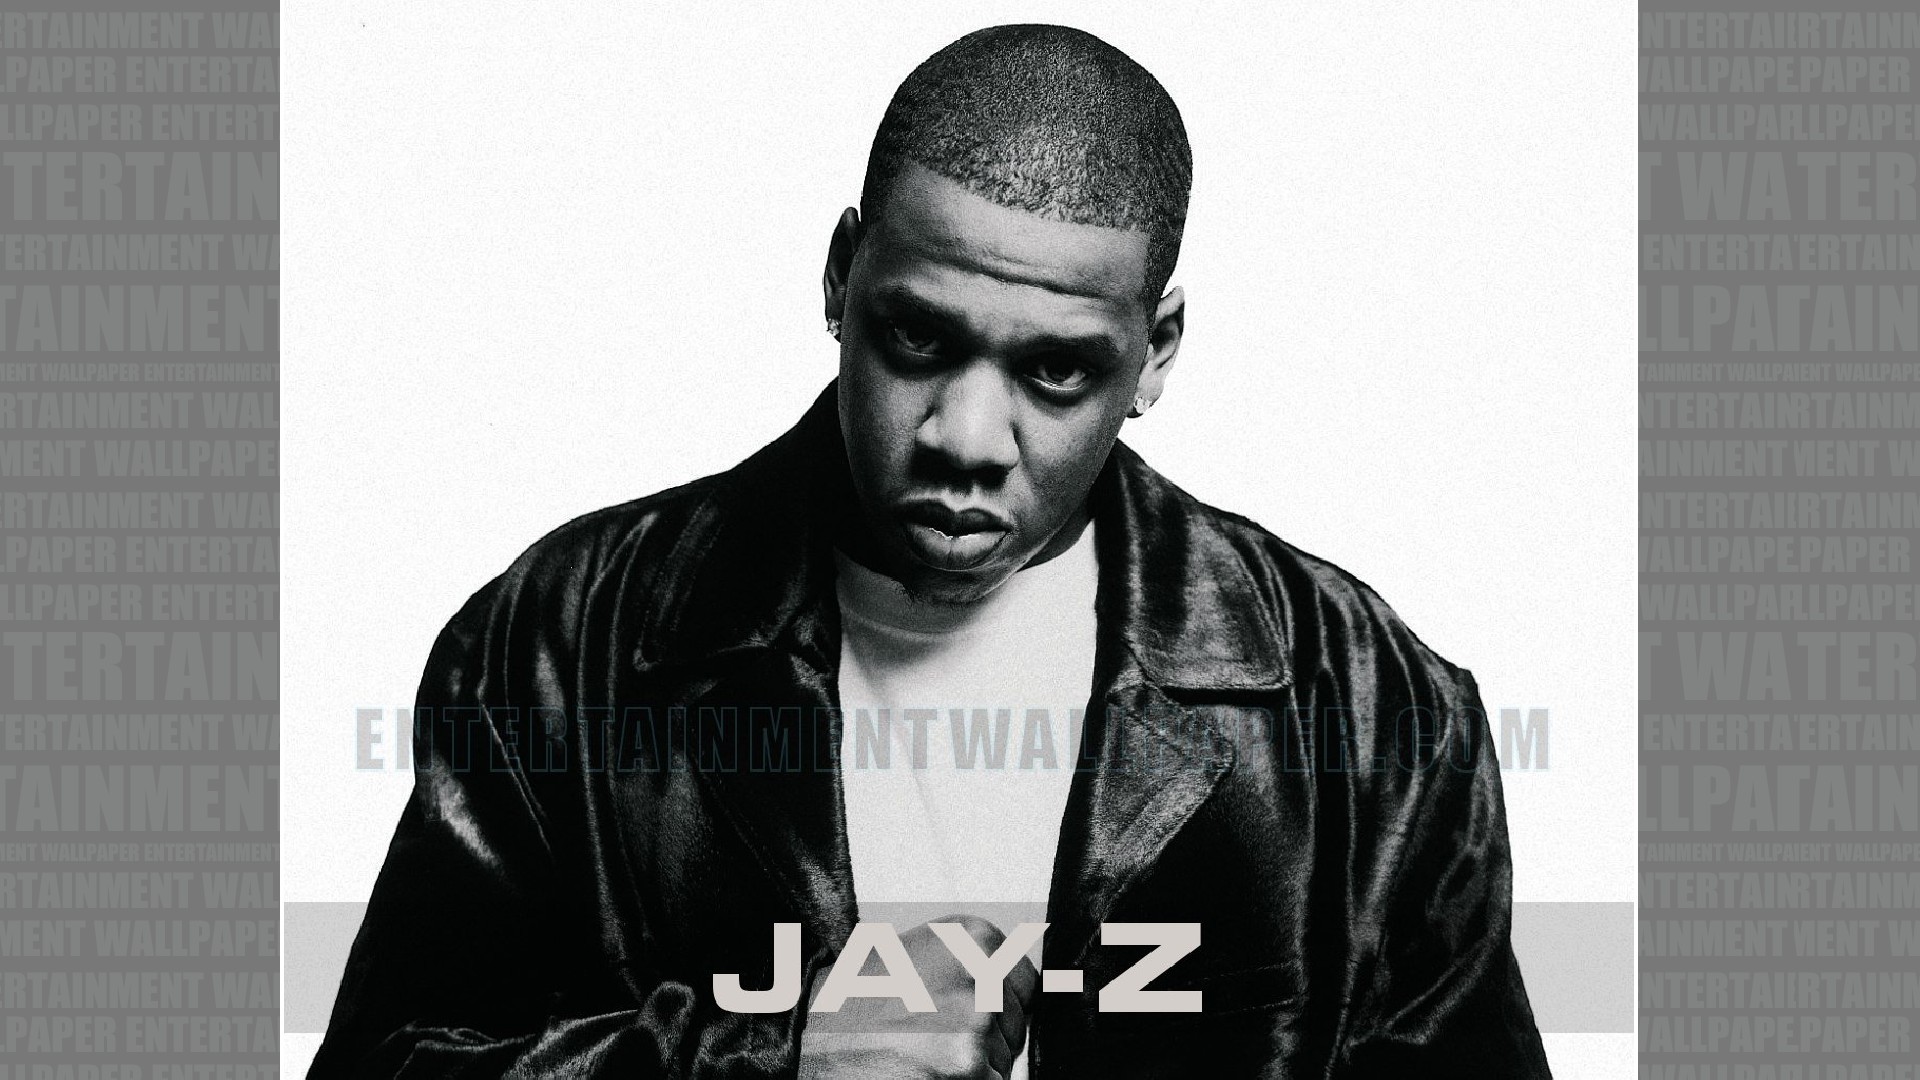 1920x1080 Jay-Z Wallpaper - Original size, download now.